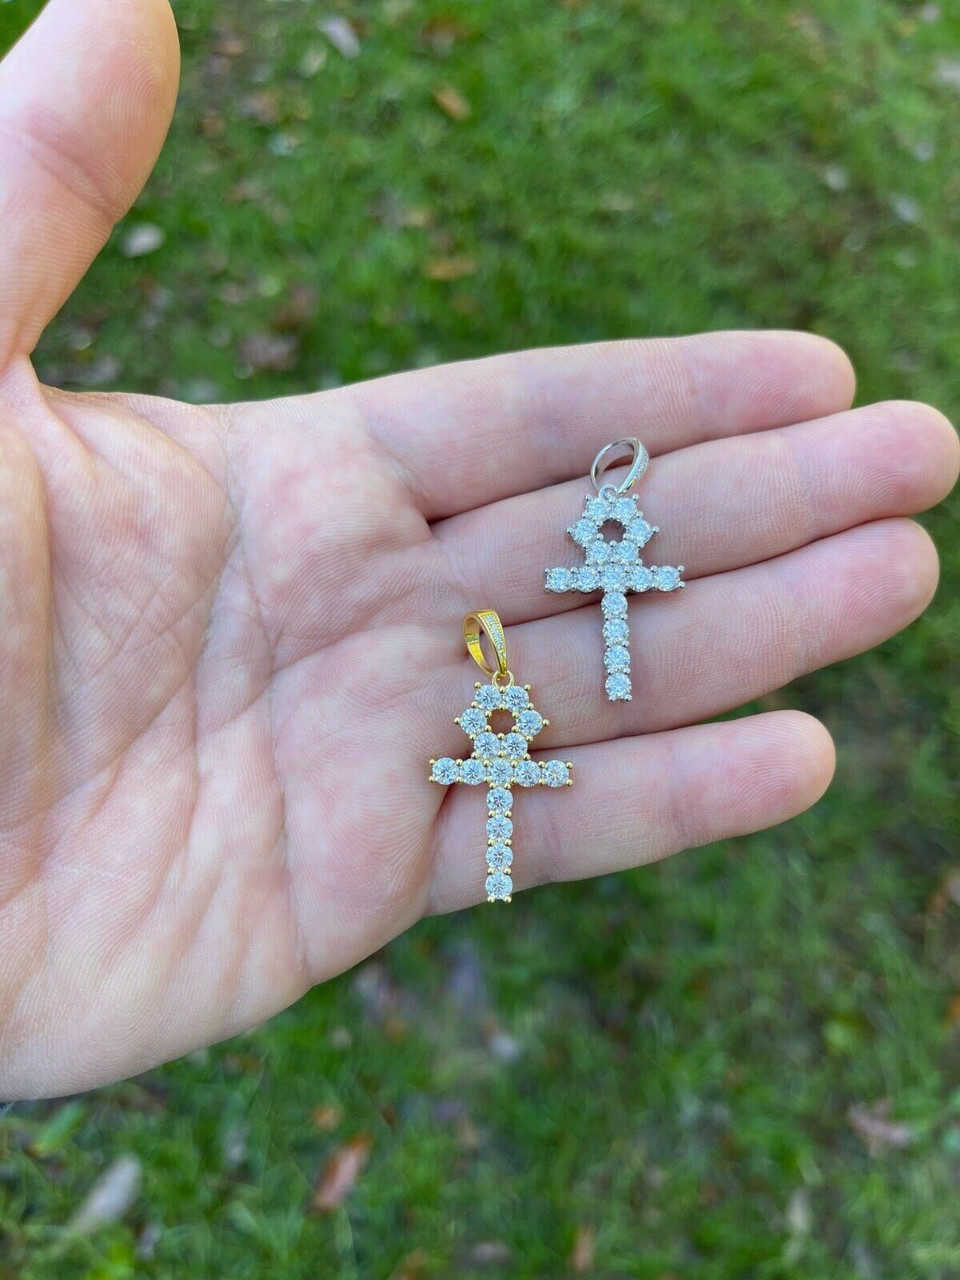 18k Yellow Gold Iced Diamond Ankh Cross Necklace Franco Chain Pendant | eBay